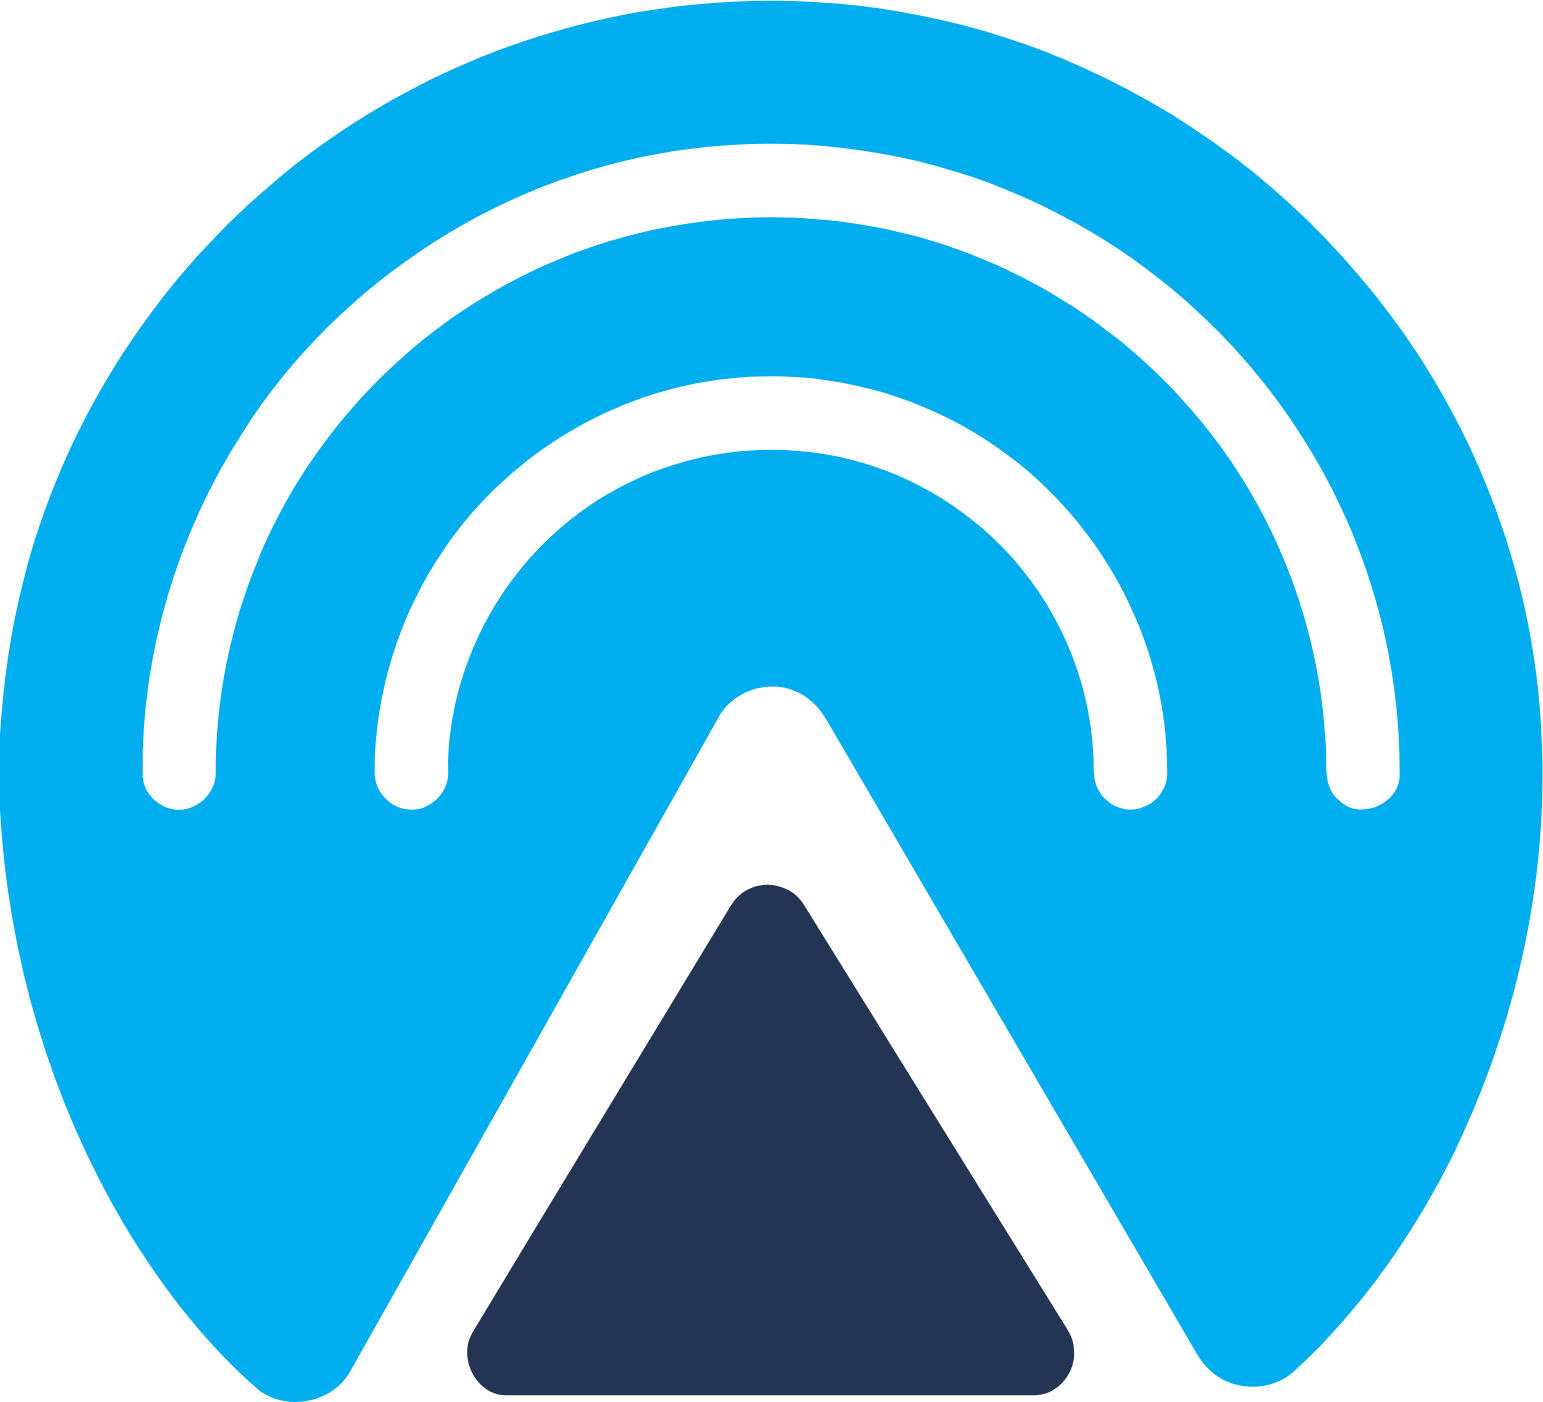 Amplify ETF Trust logo (PNG transparent)